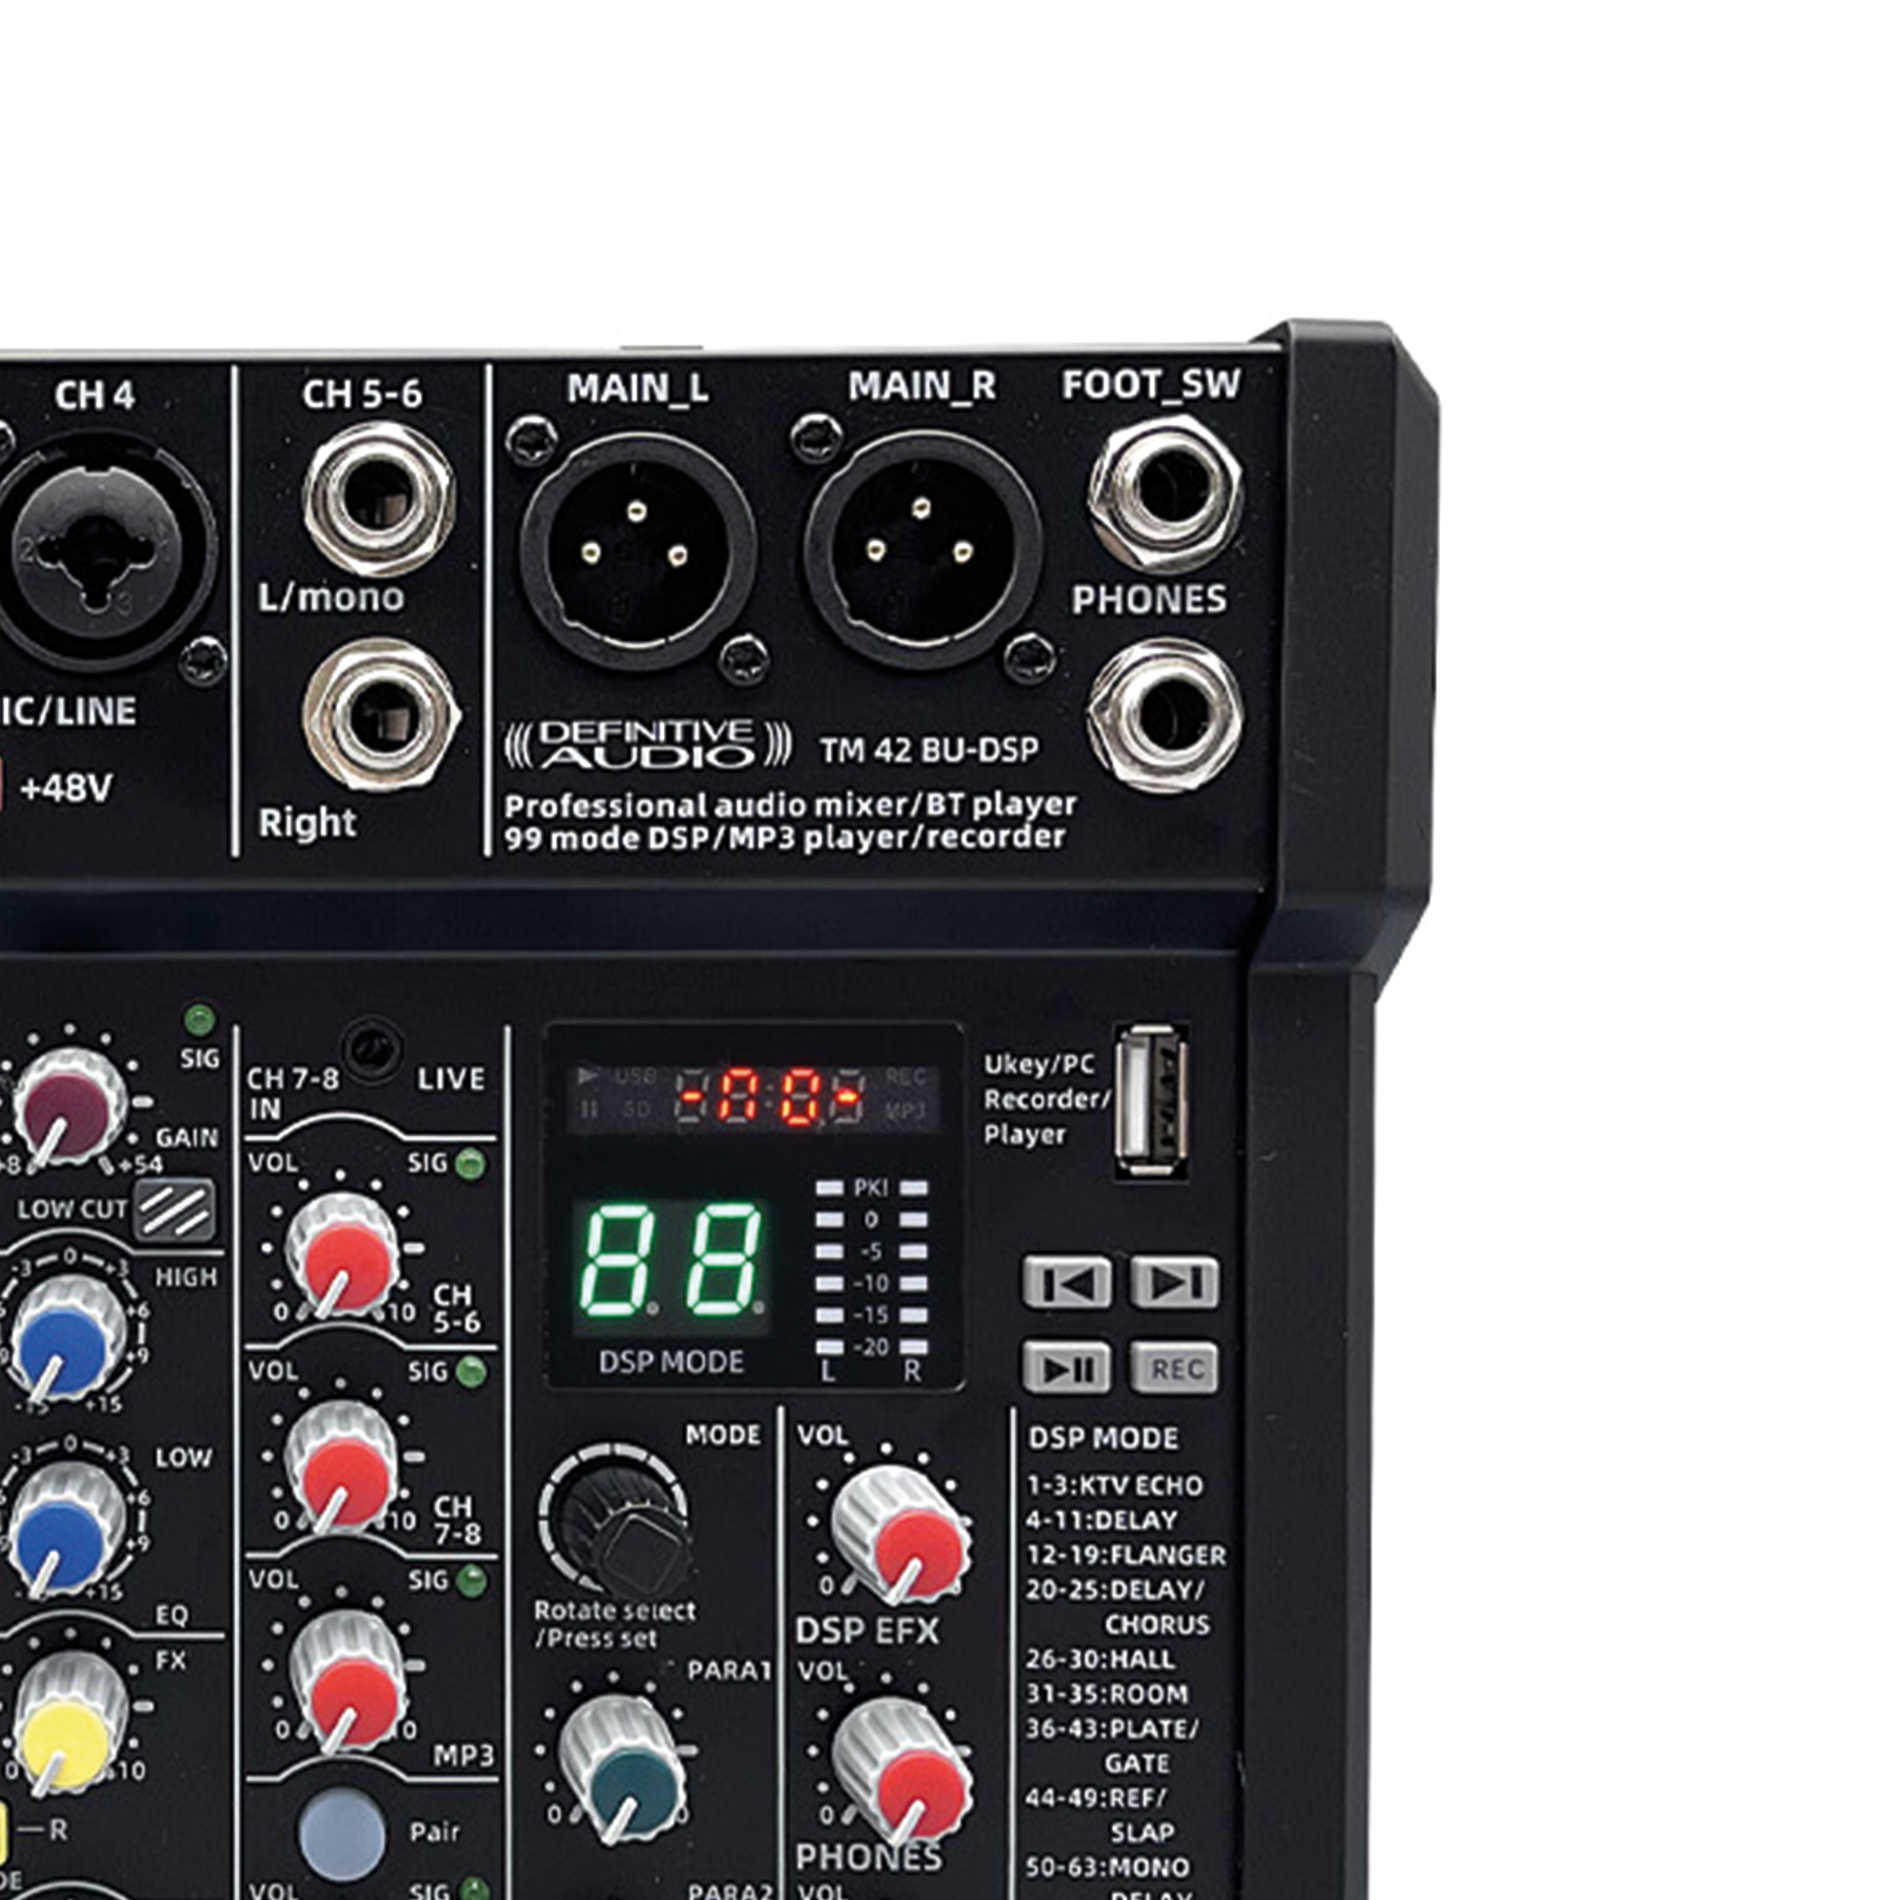 Definitive Audio Tm 42 Bu-dsp - Analog mixing desk - Variation 6